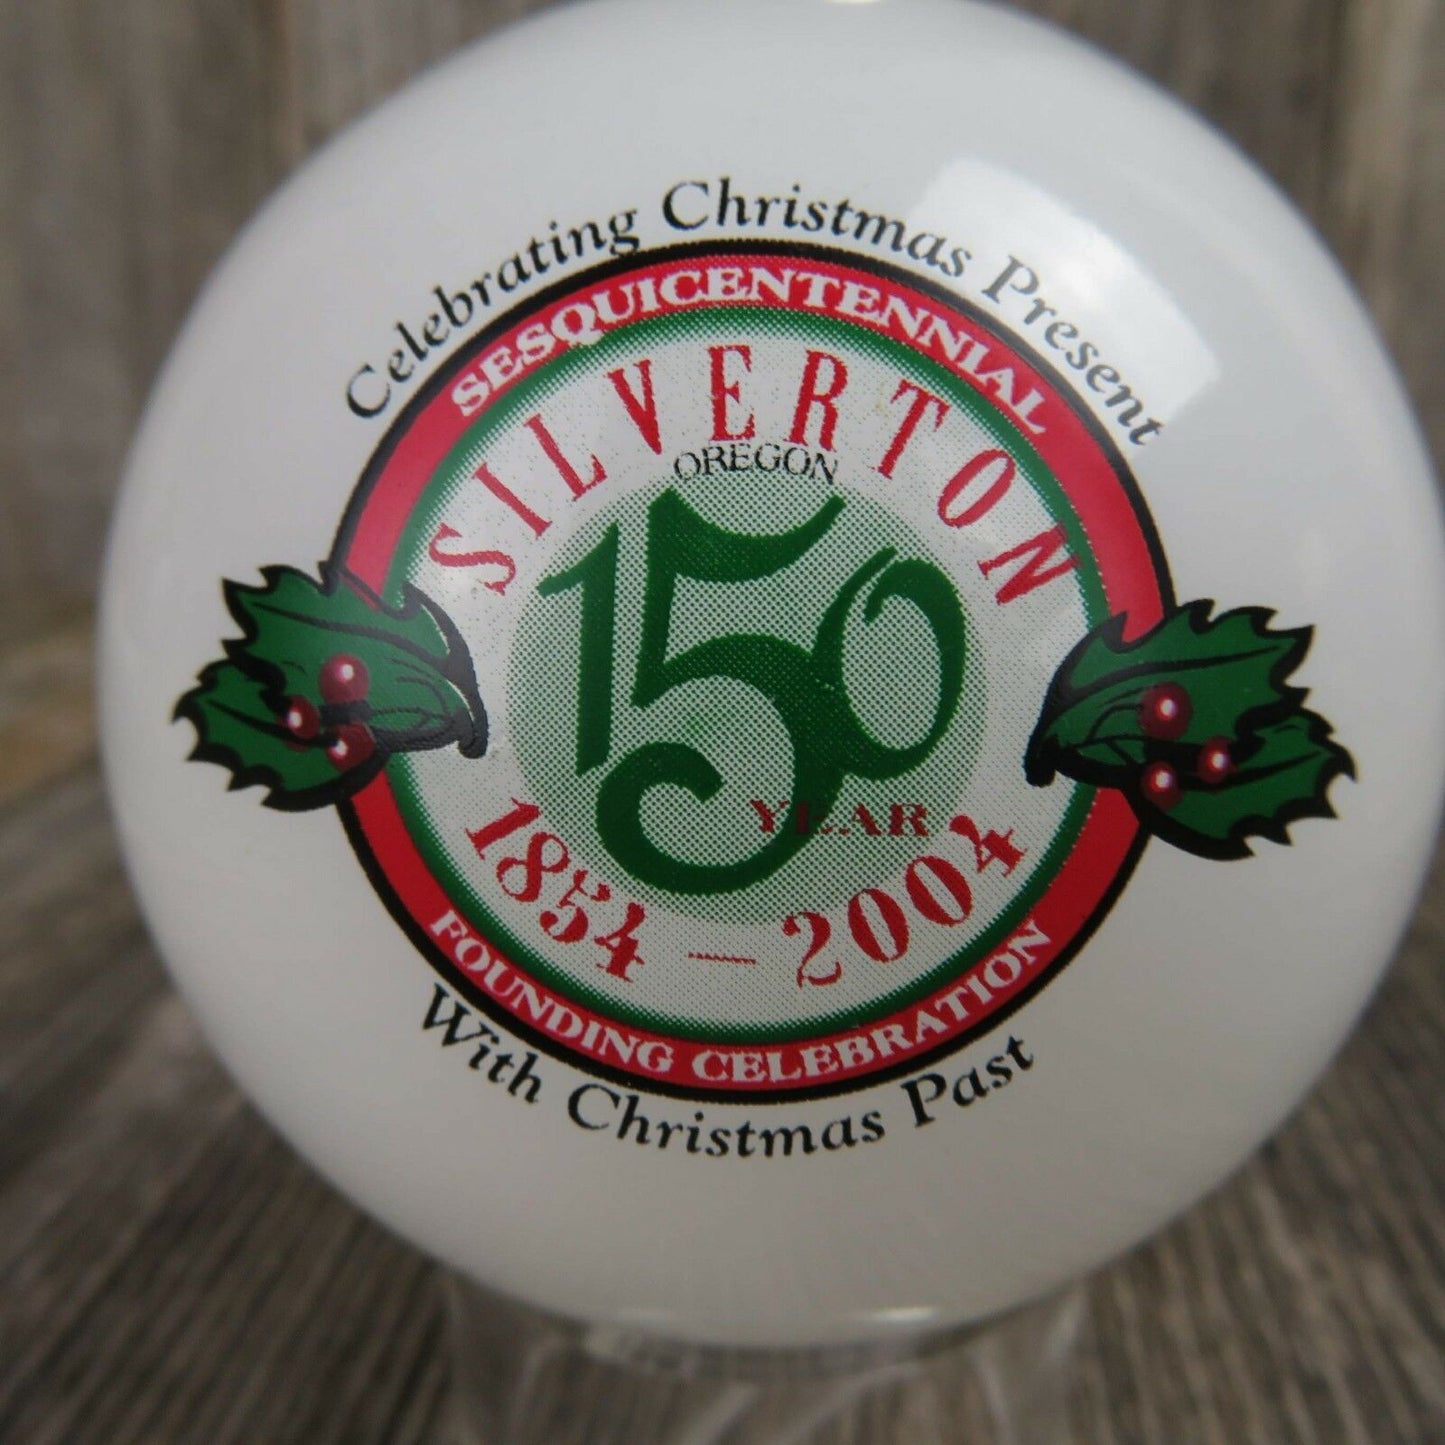 Oregon State Glass Ball Christmas Ornament Silverton 150 Celebration Souvenir - At Grandma's Table